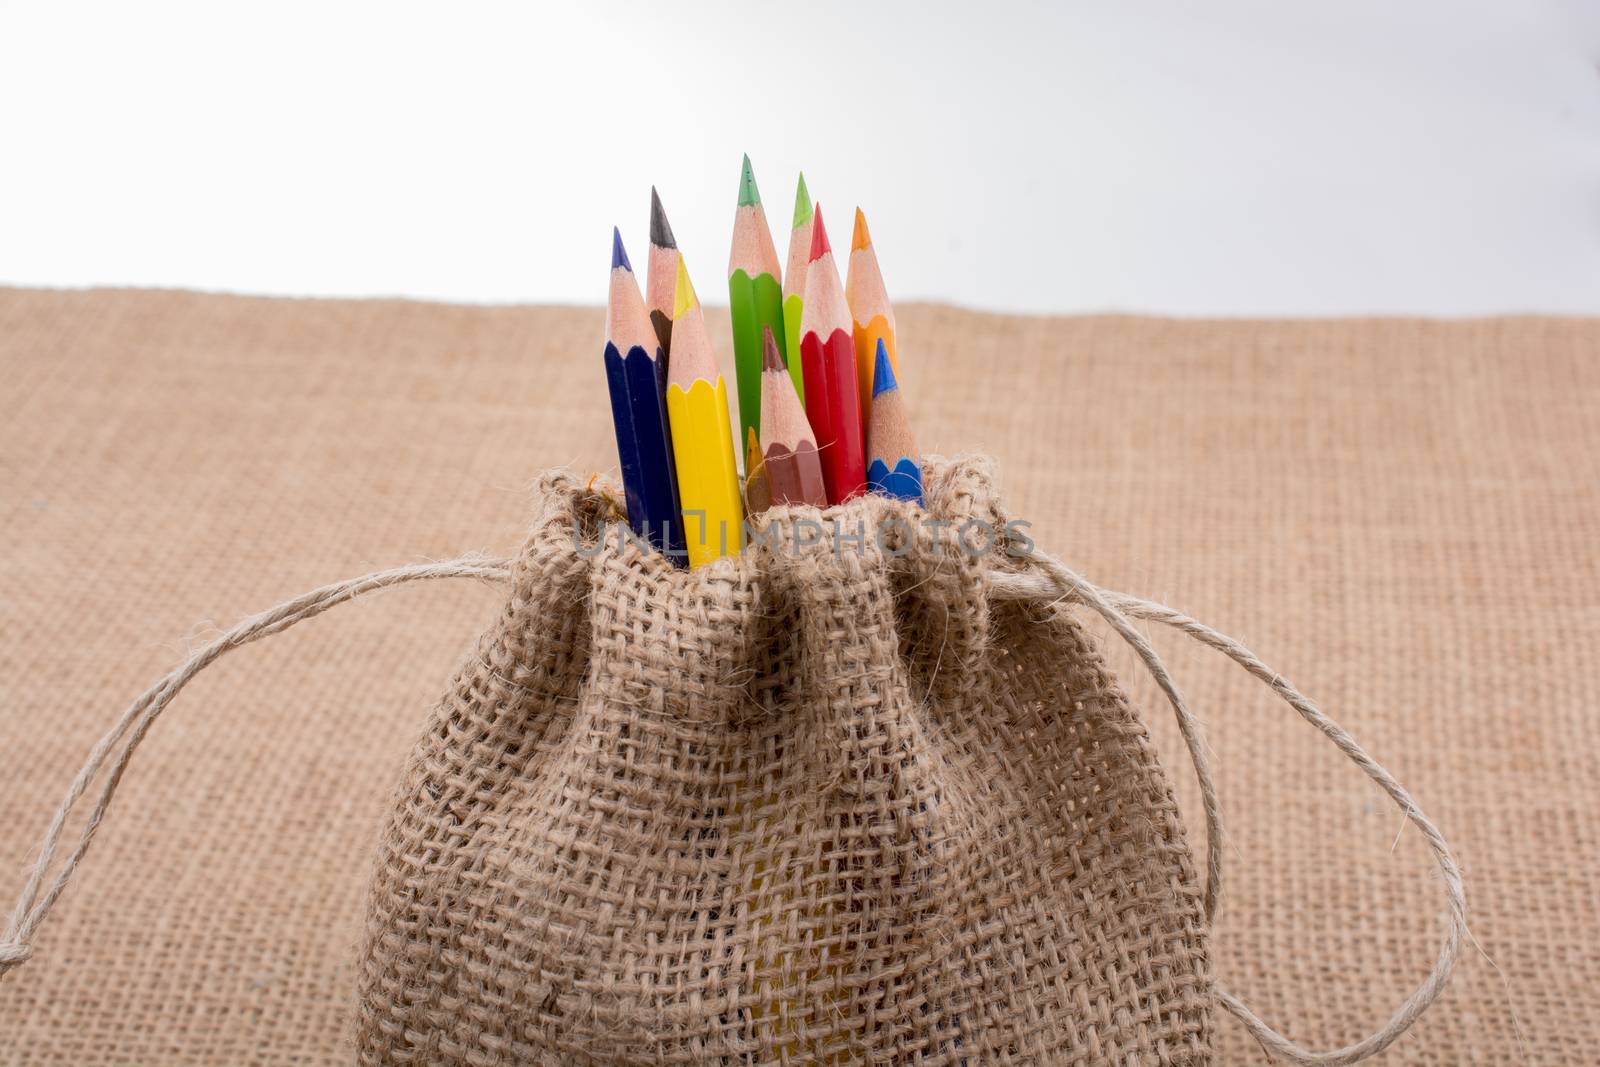  Color Pencils in linen sack on canvas by berkay